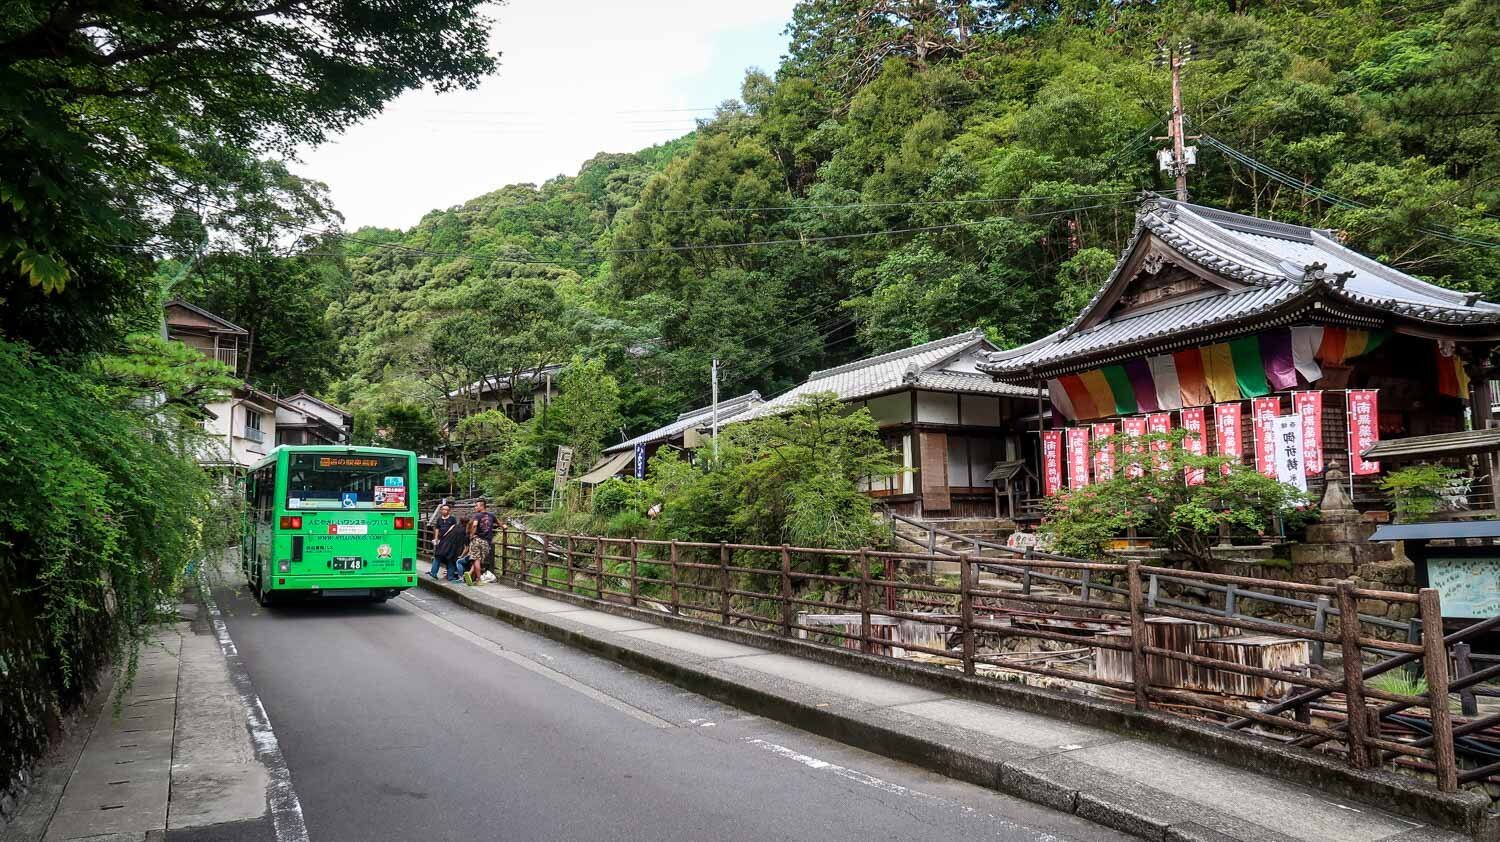 Kumano Kodo Trail Buses between cities